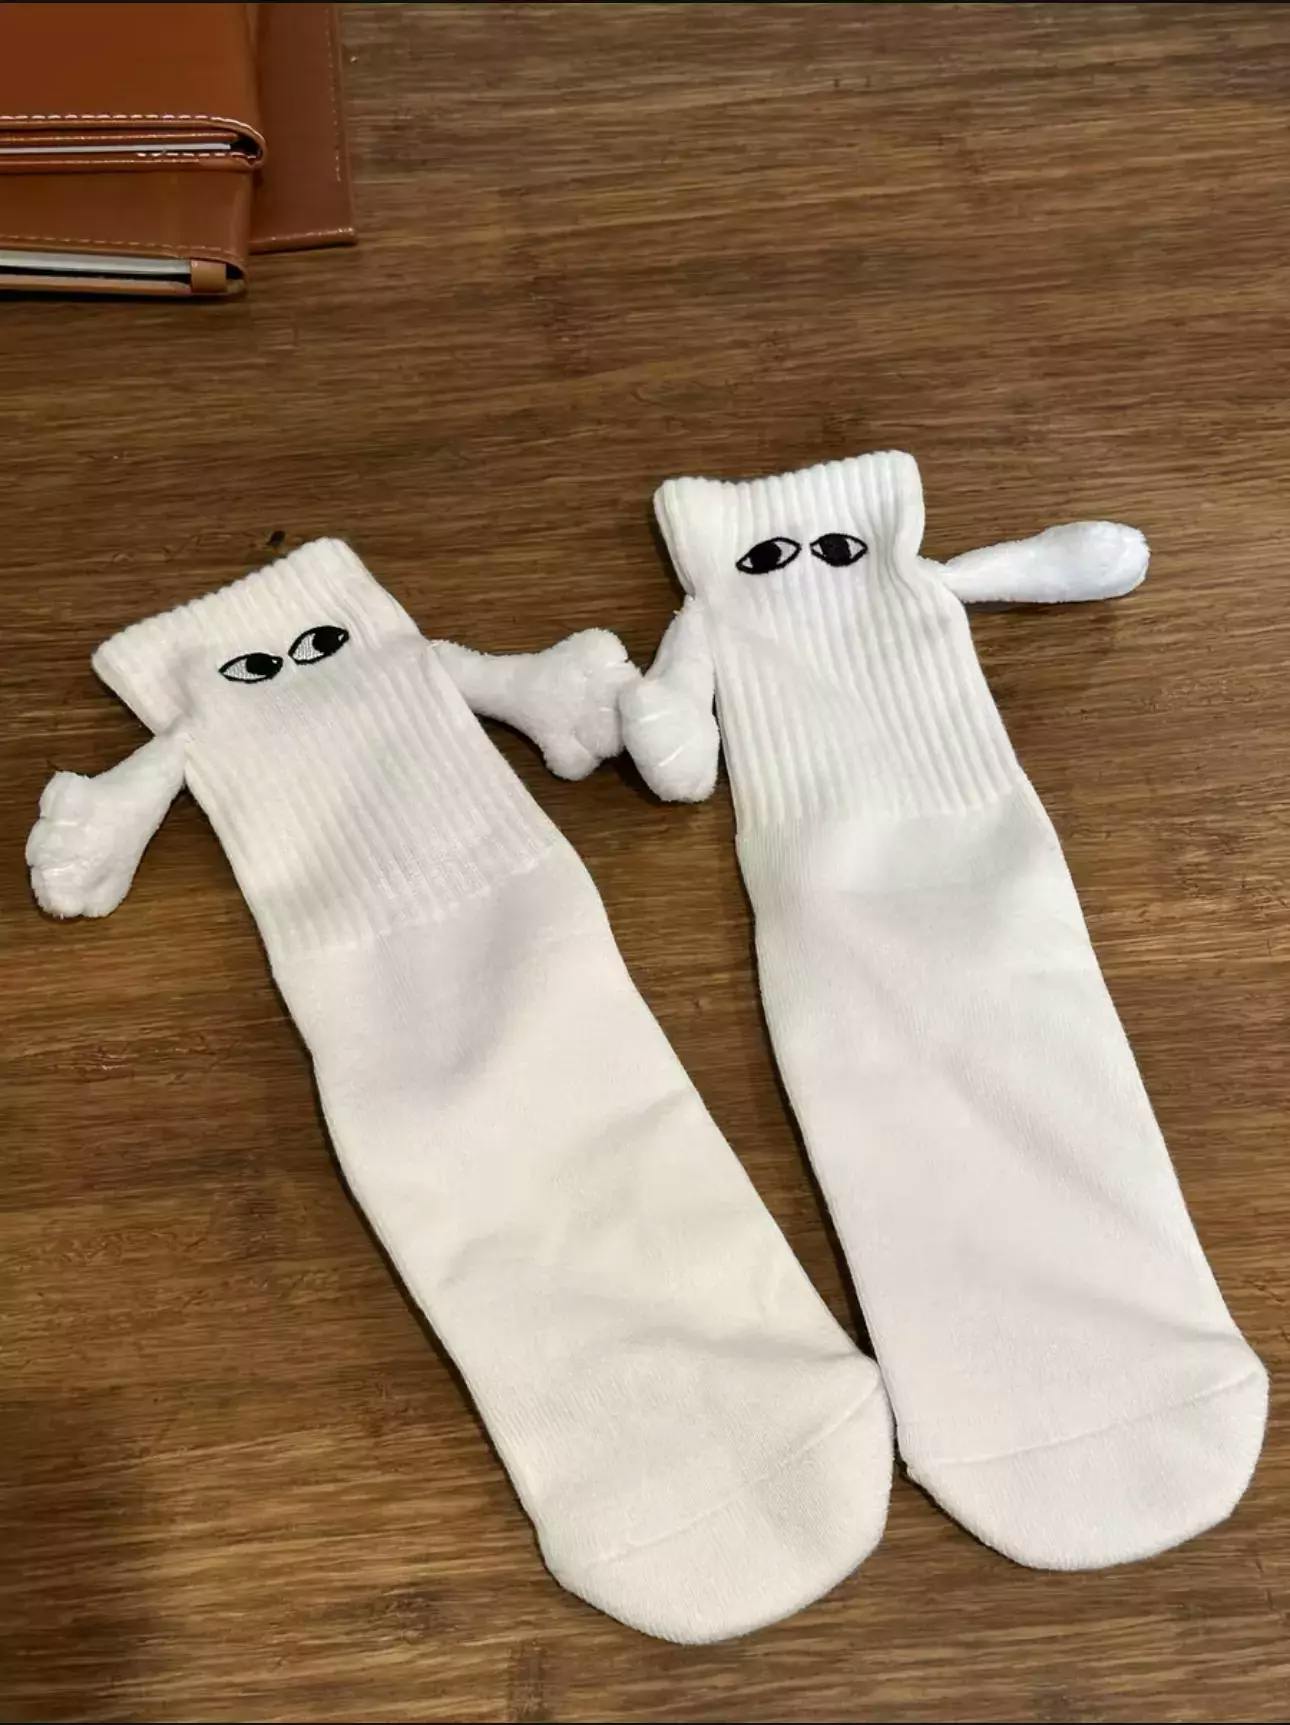 The Buddy Socks